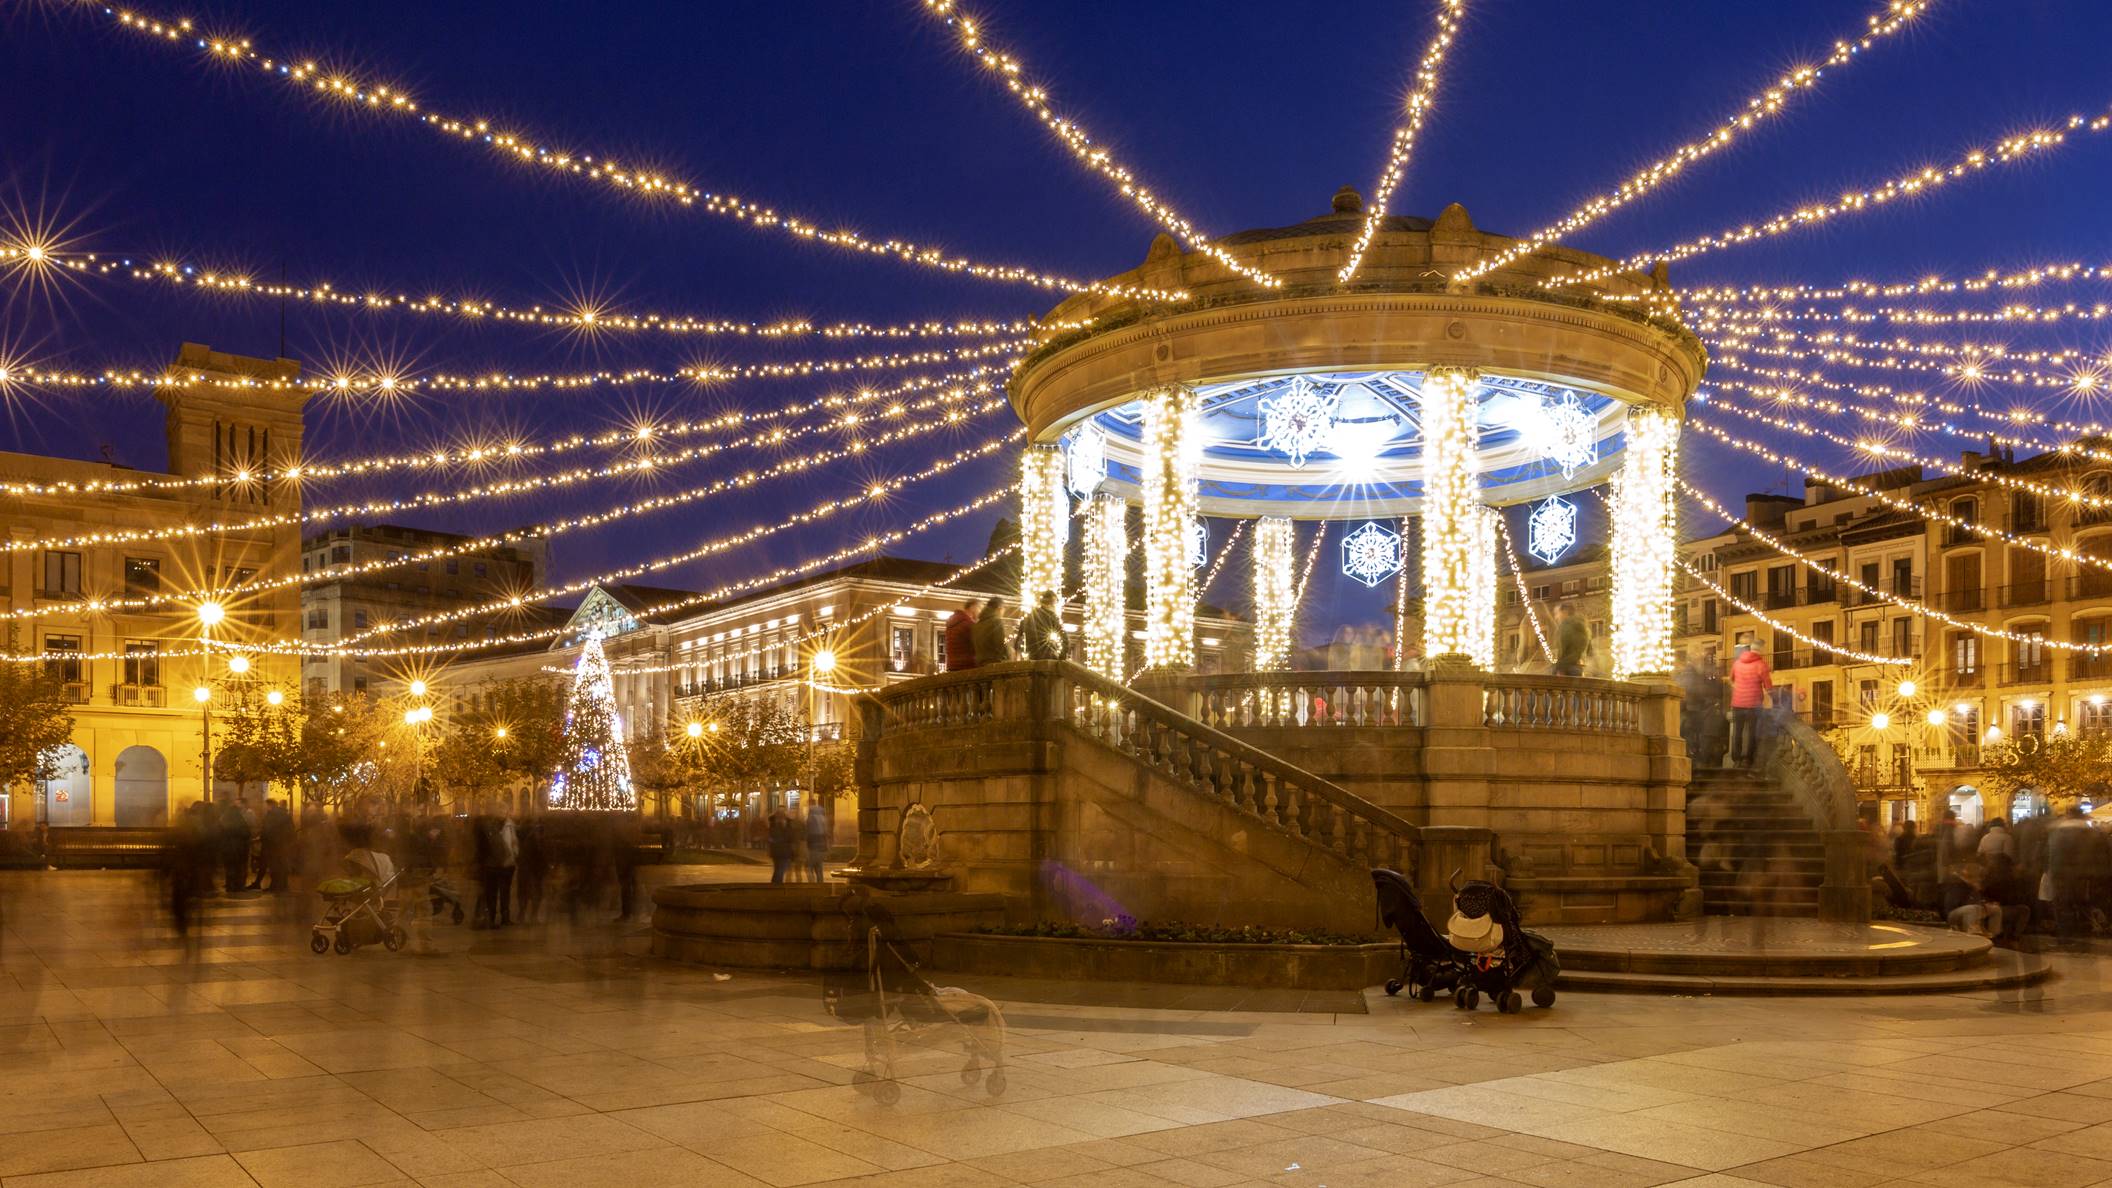 Luces de Navidad en Pamplona. Plaza del Castillo